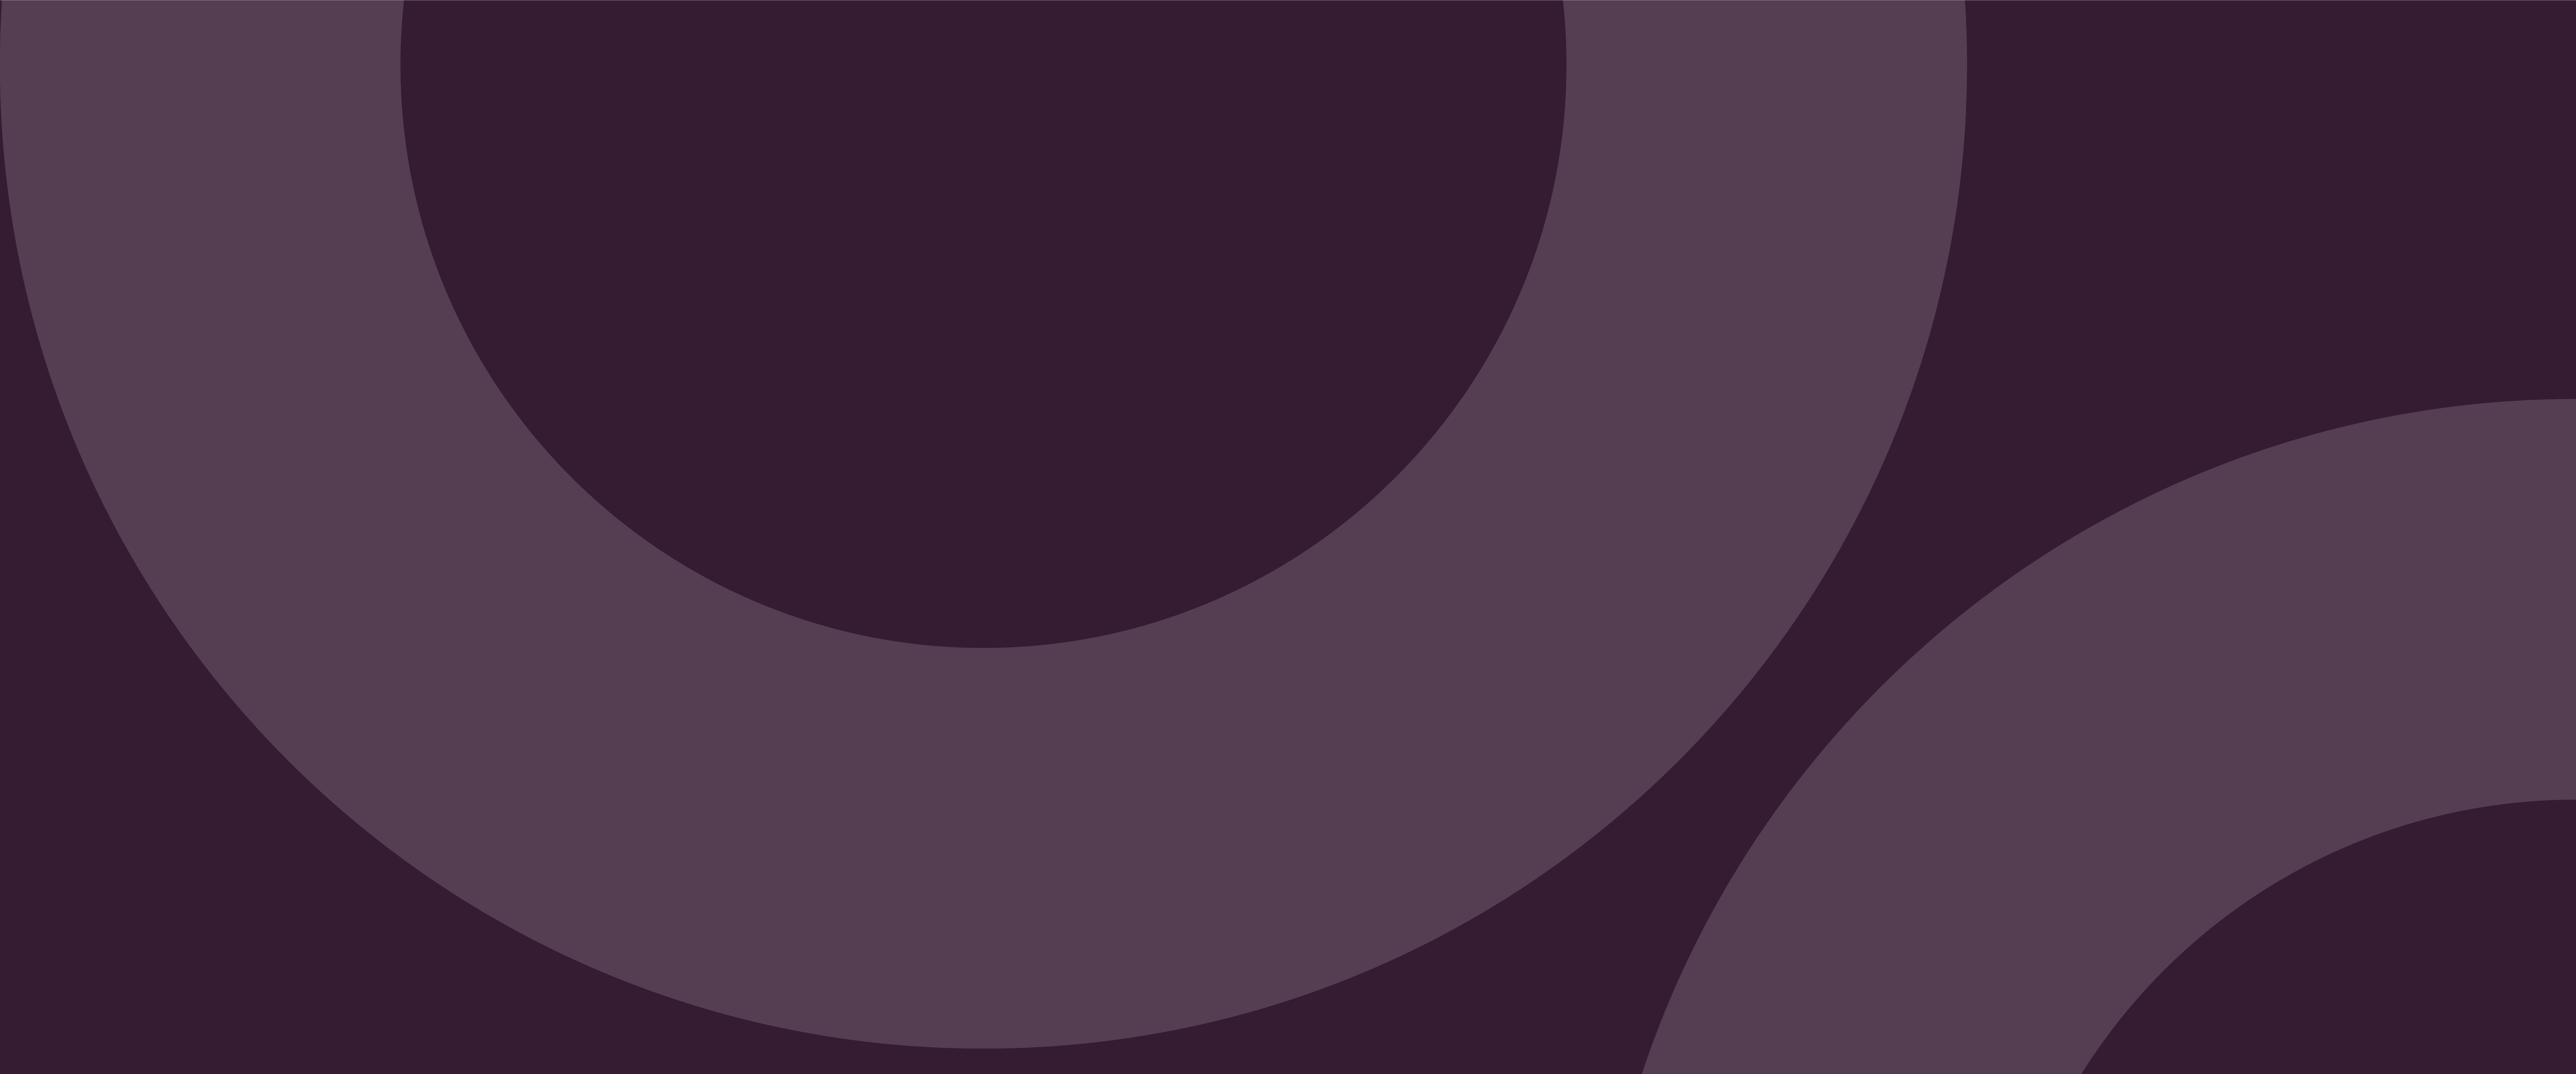 Abstract image of purple circles 